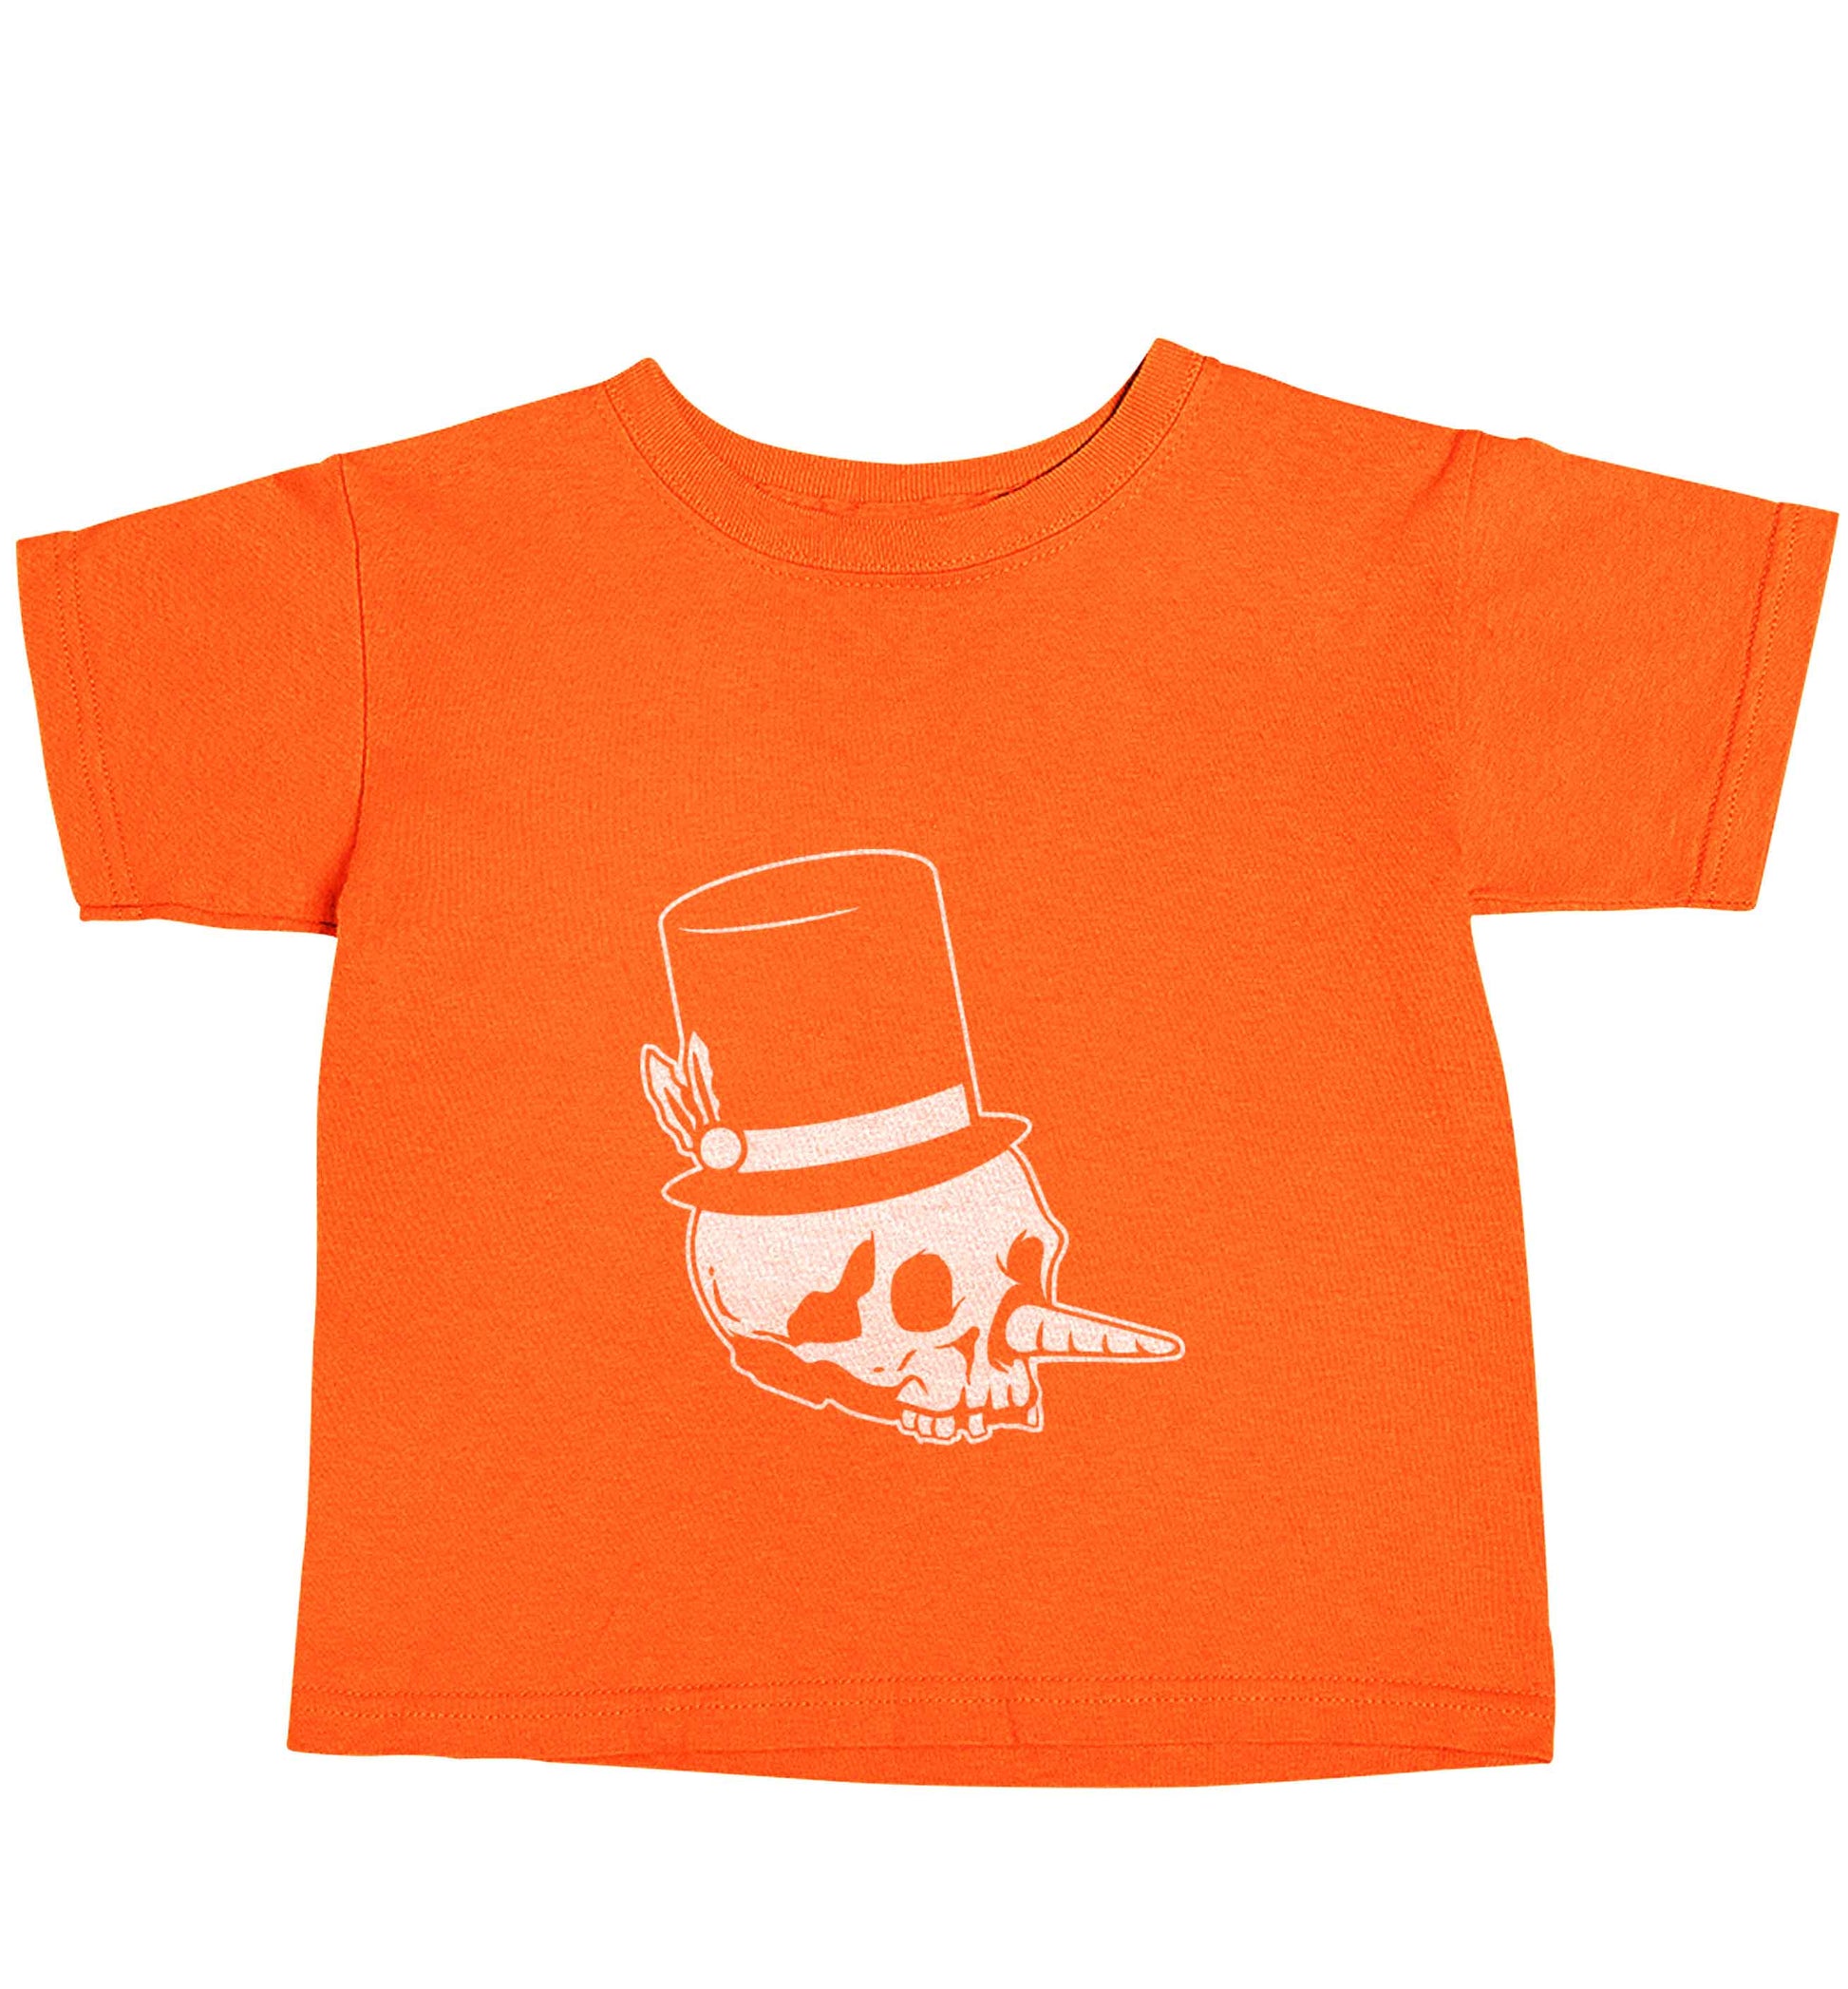 Snowman punk orange baby toddler Tshirt 2 Years